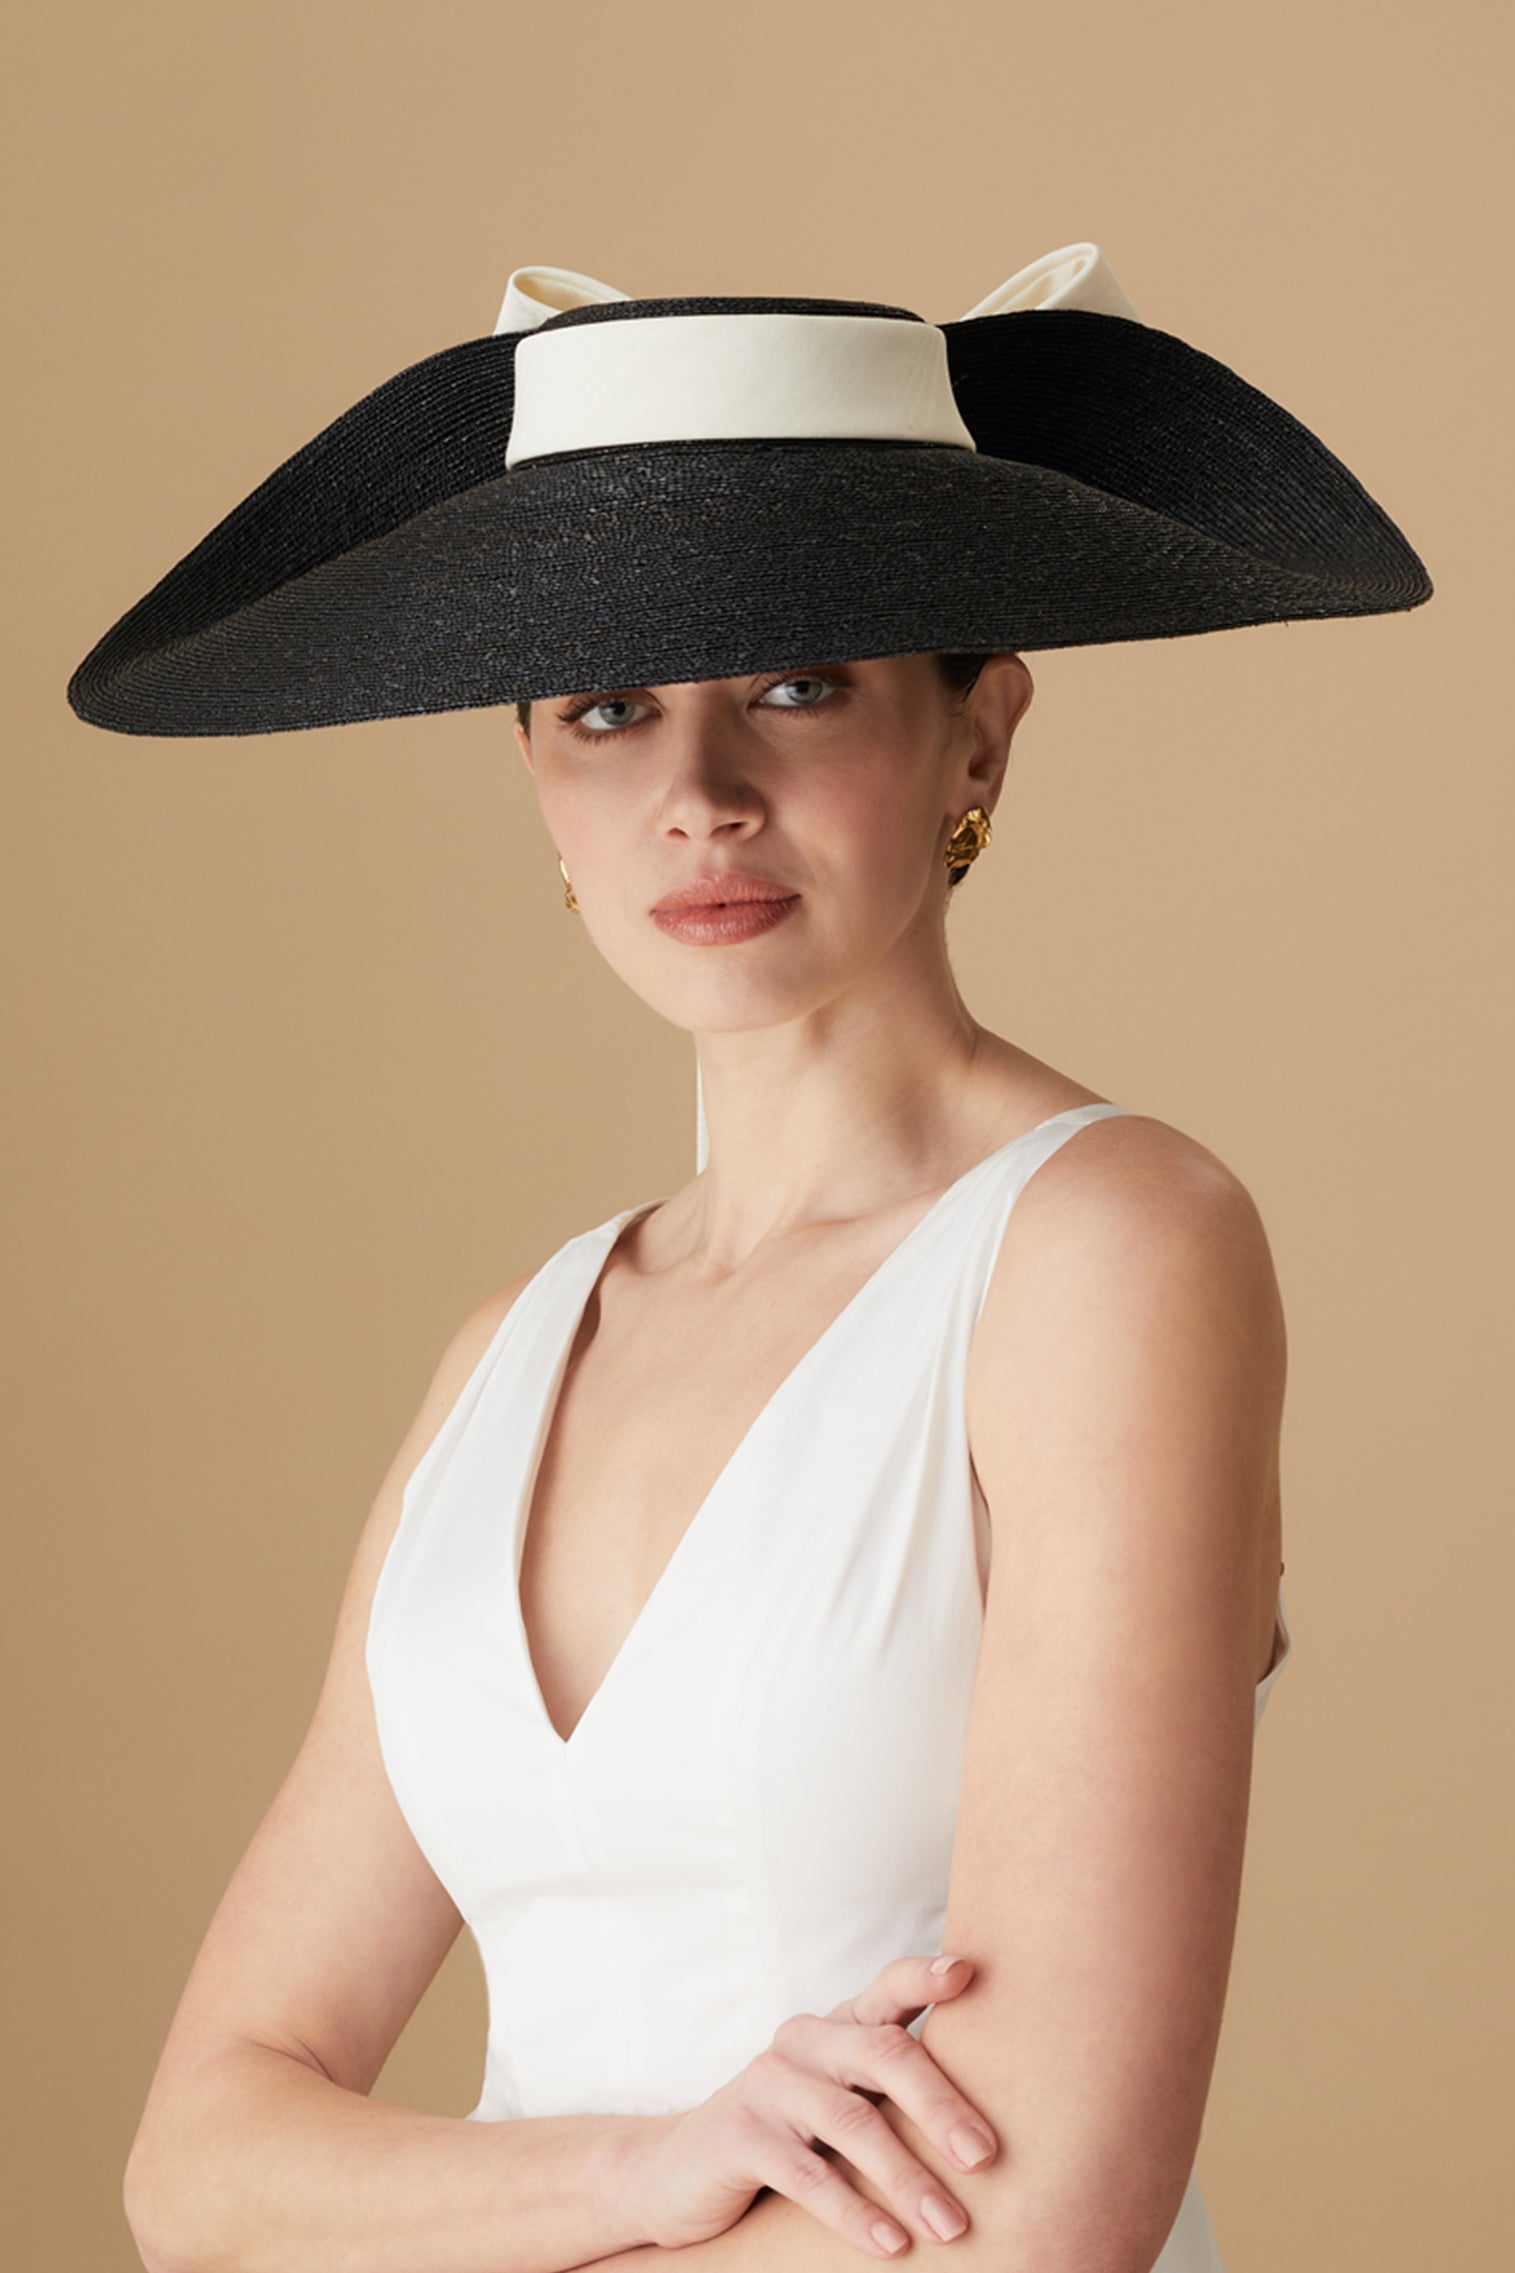 Lady Grey Black Wide Brim Hat - Panamas, Straw and Sun Hats for Women - Lock & Co. Hatters London UK